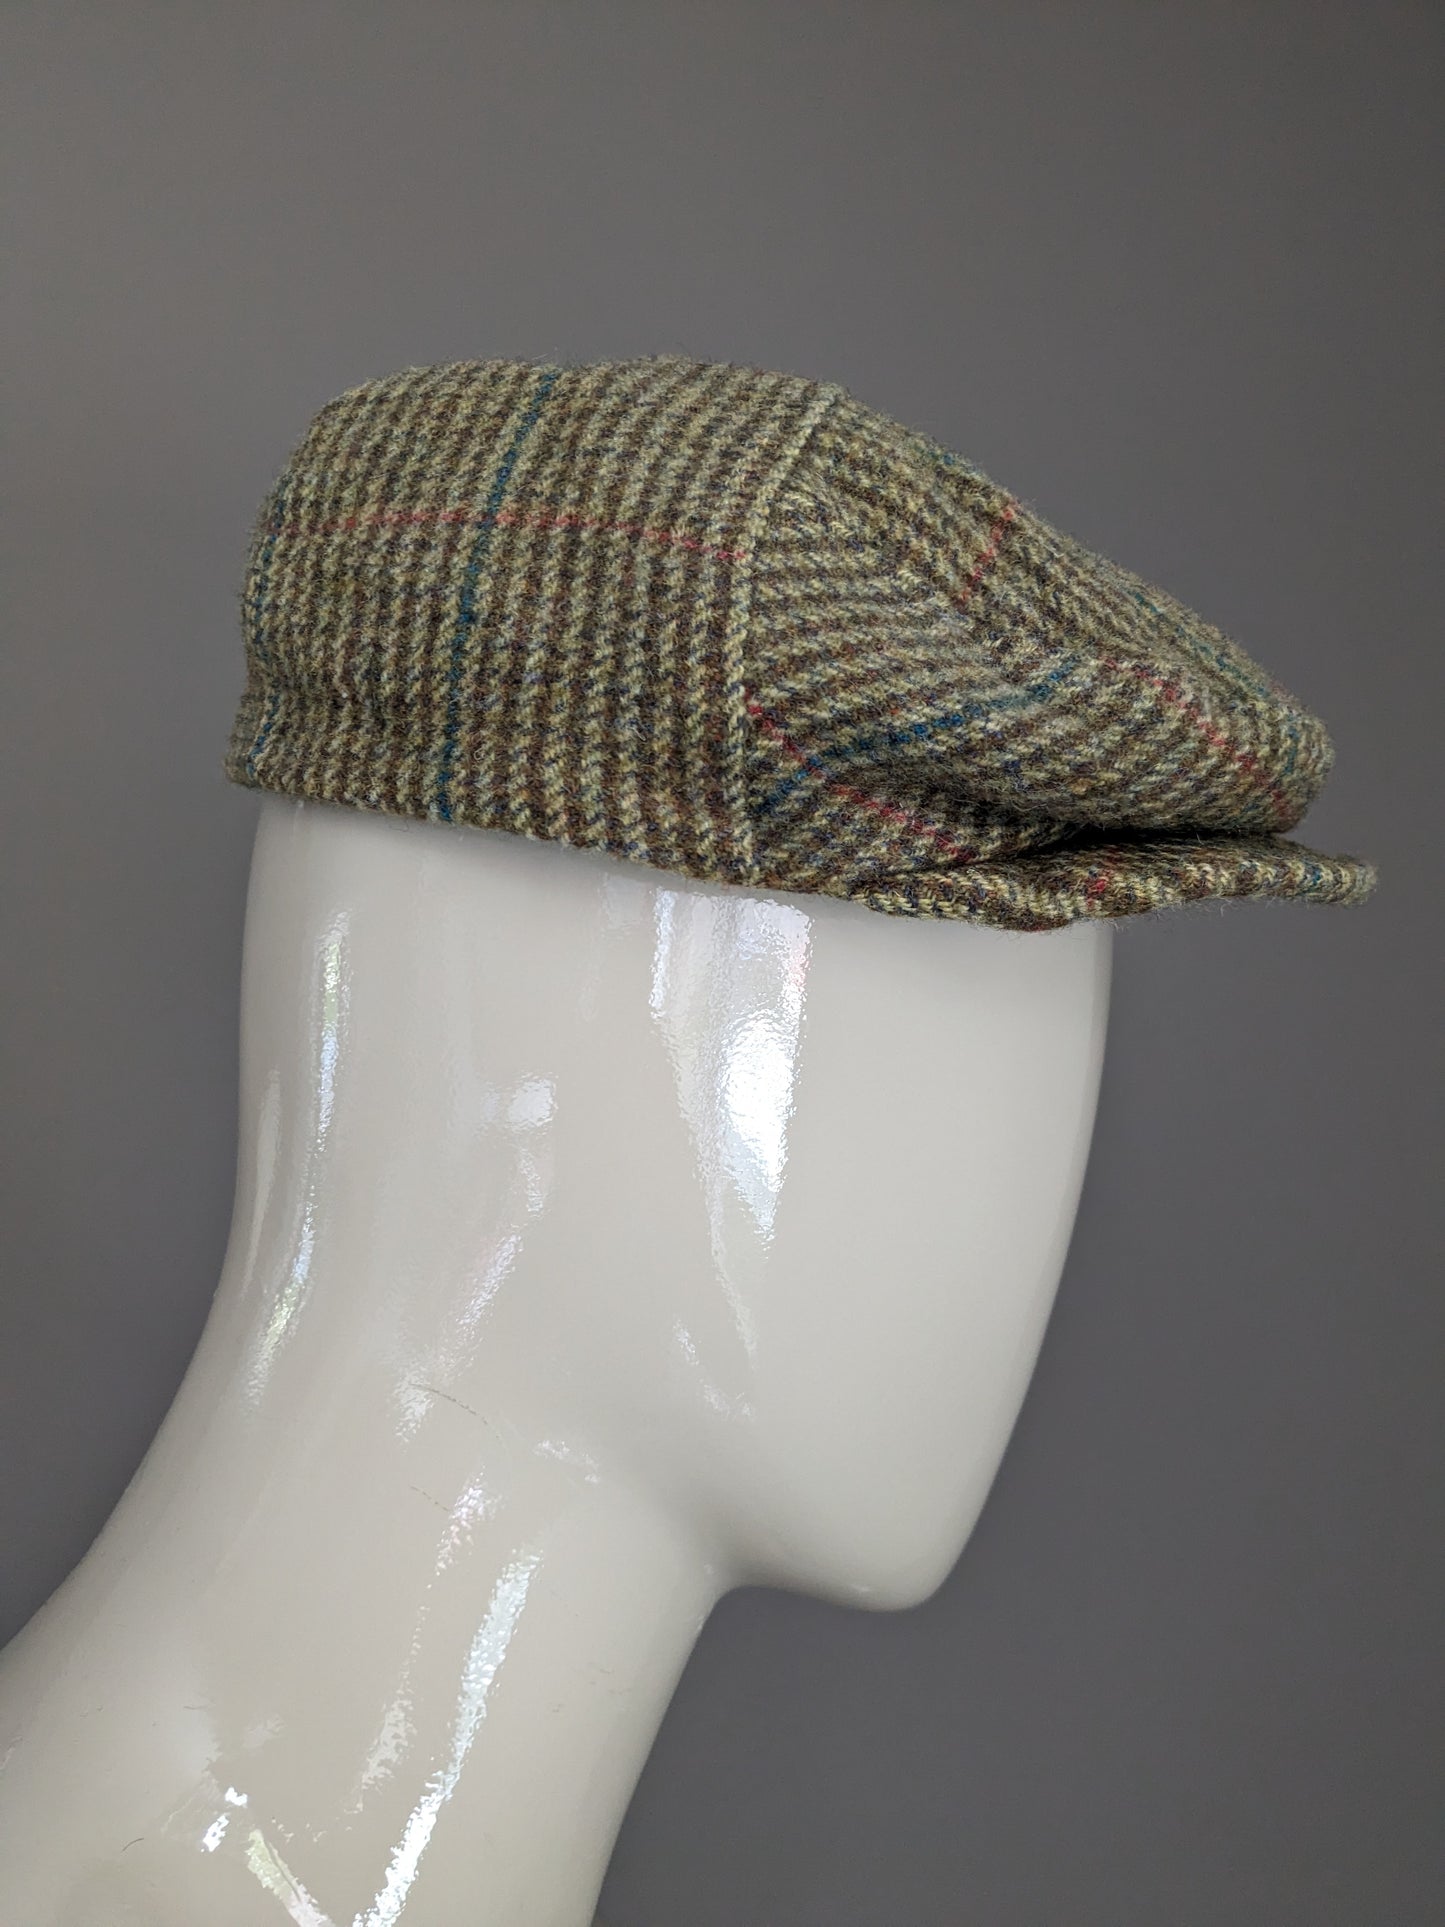 Vintage John Hanly & Co Wollen flat cap / pet. Bruin groen Blauw Rood geruit. 56 cm omtrek.